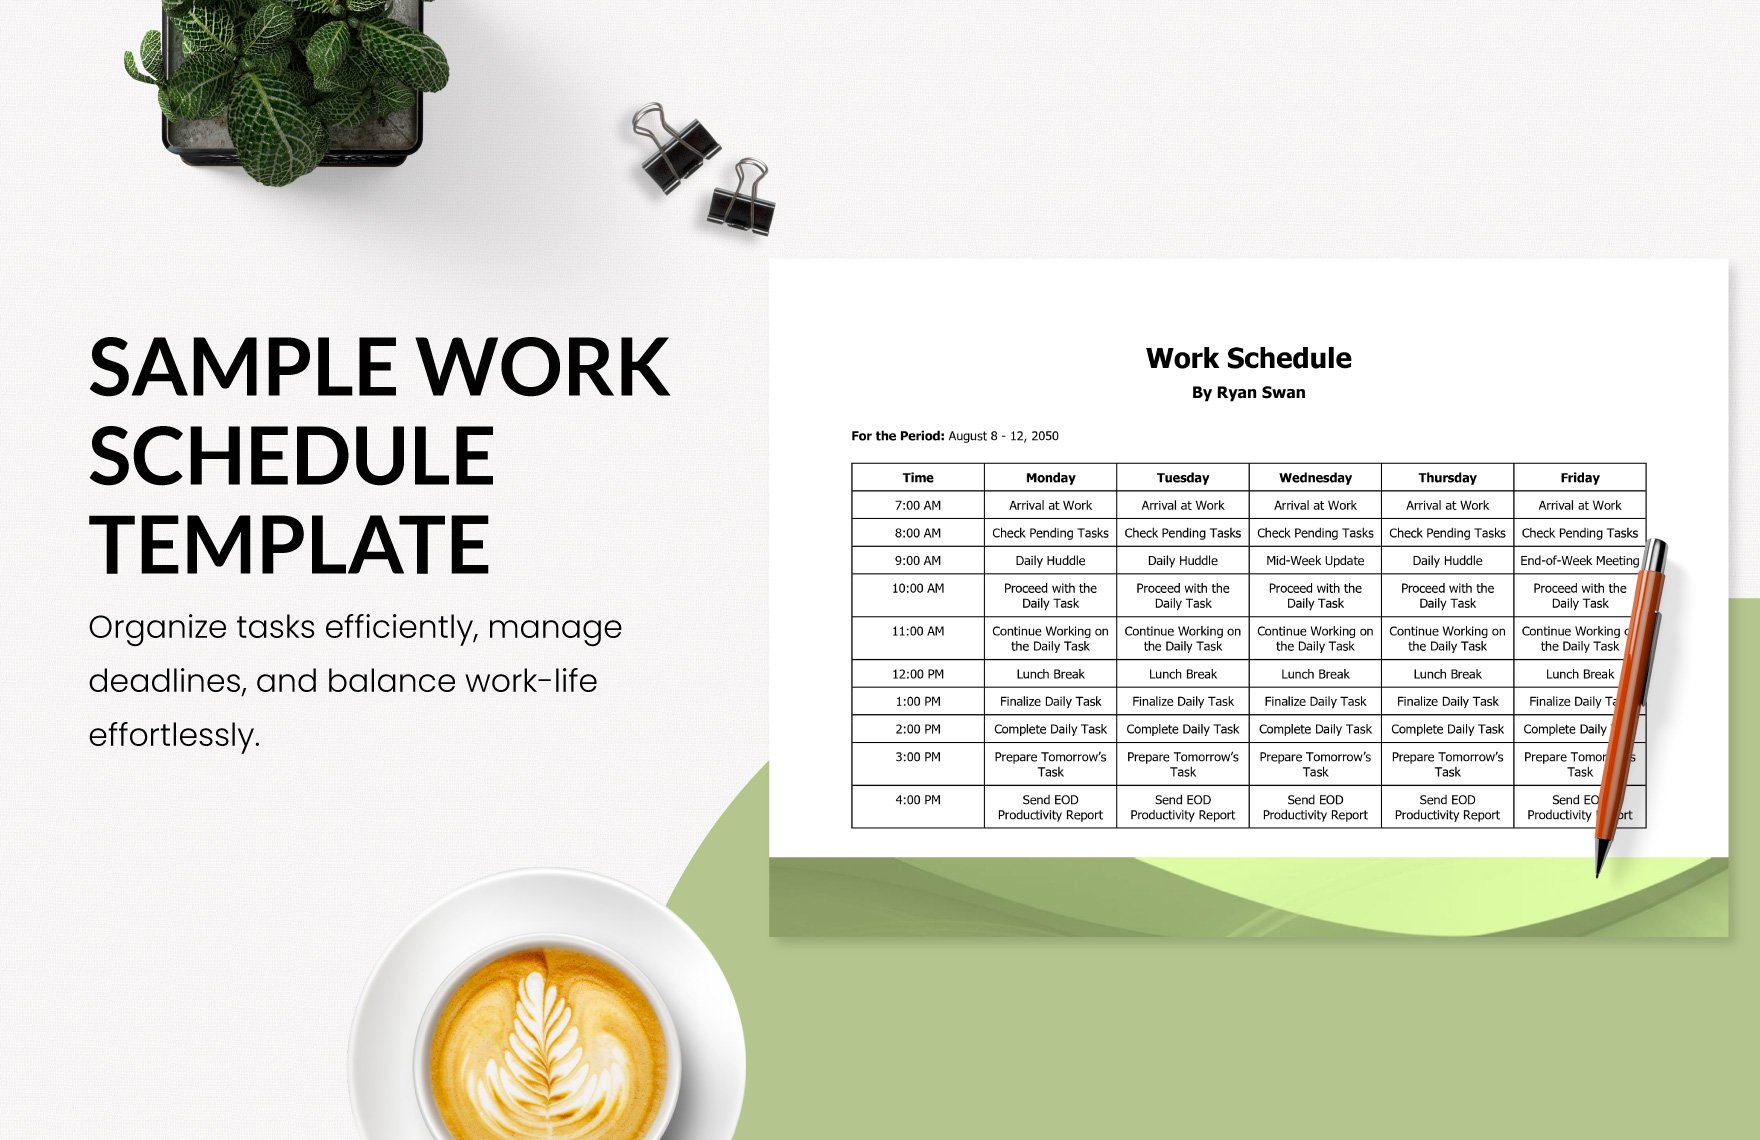 Sample Work Schedule Template